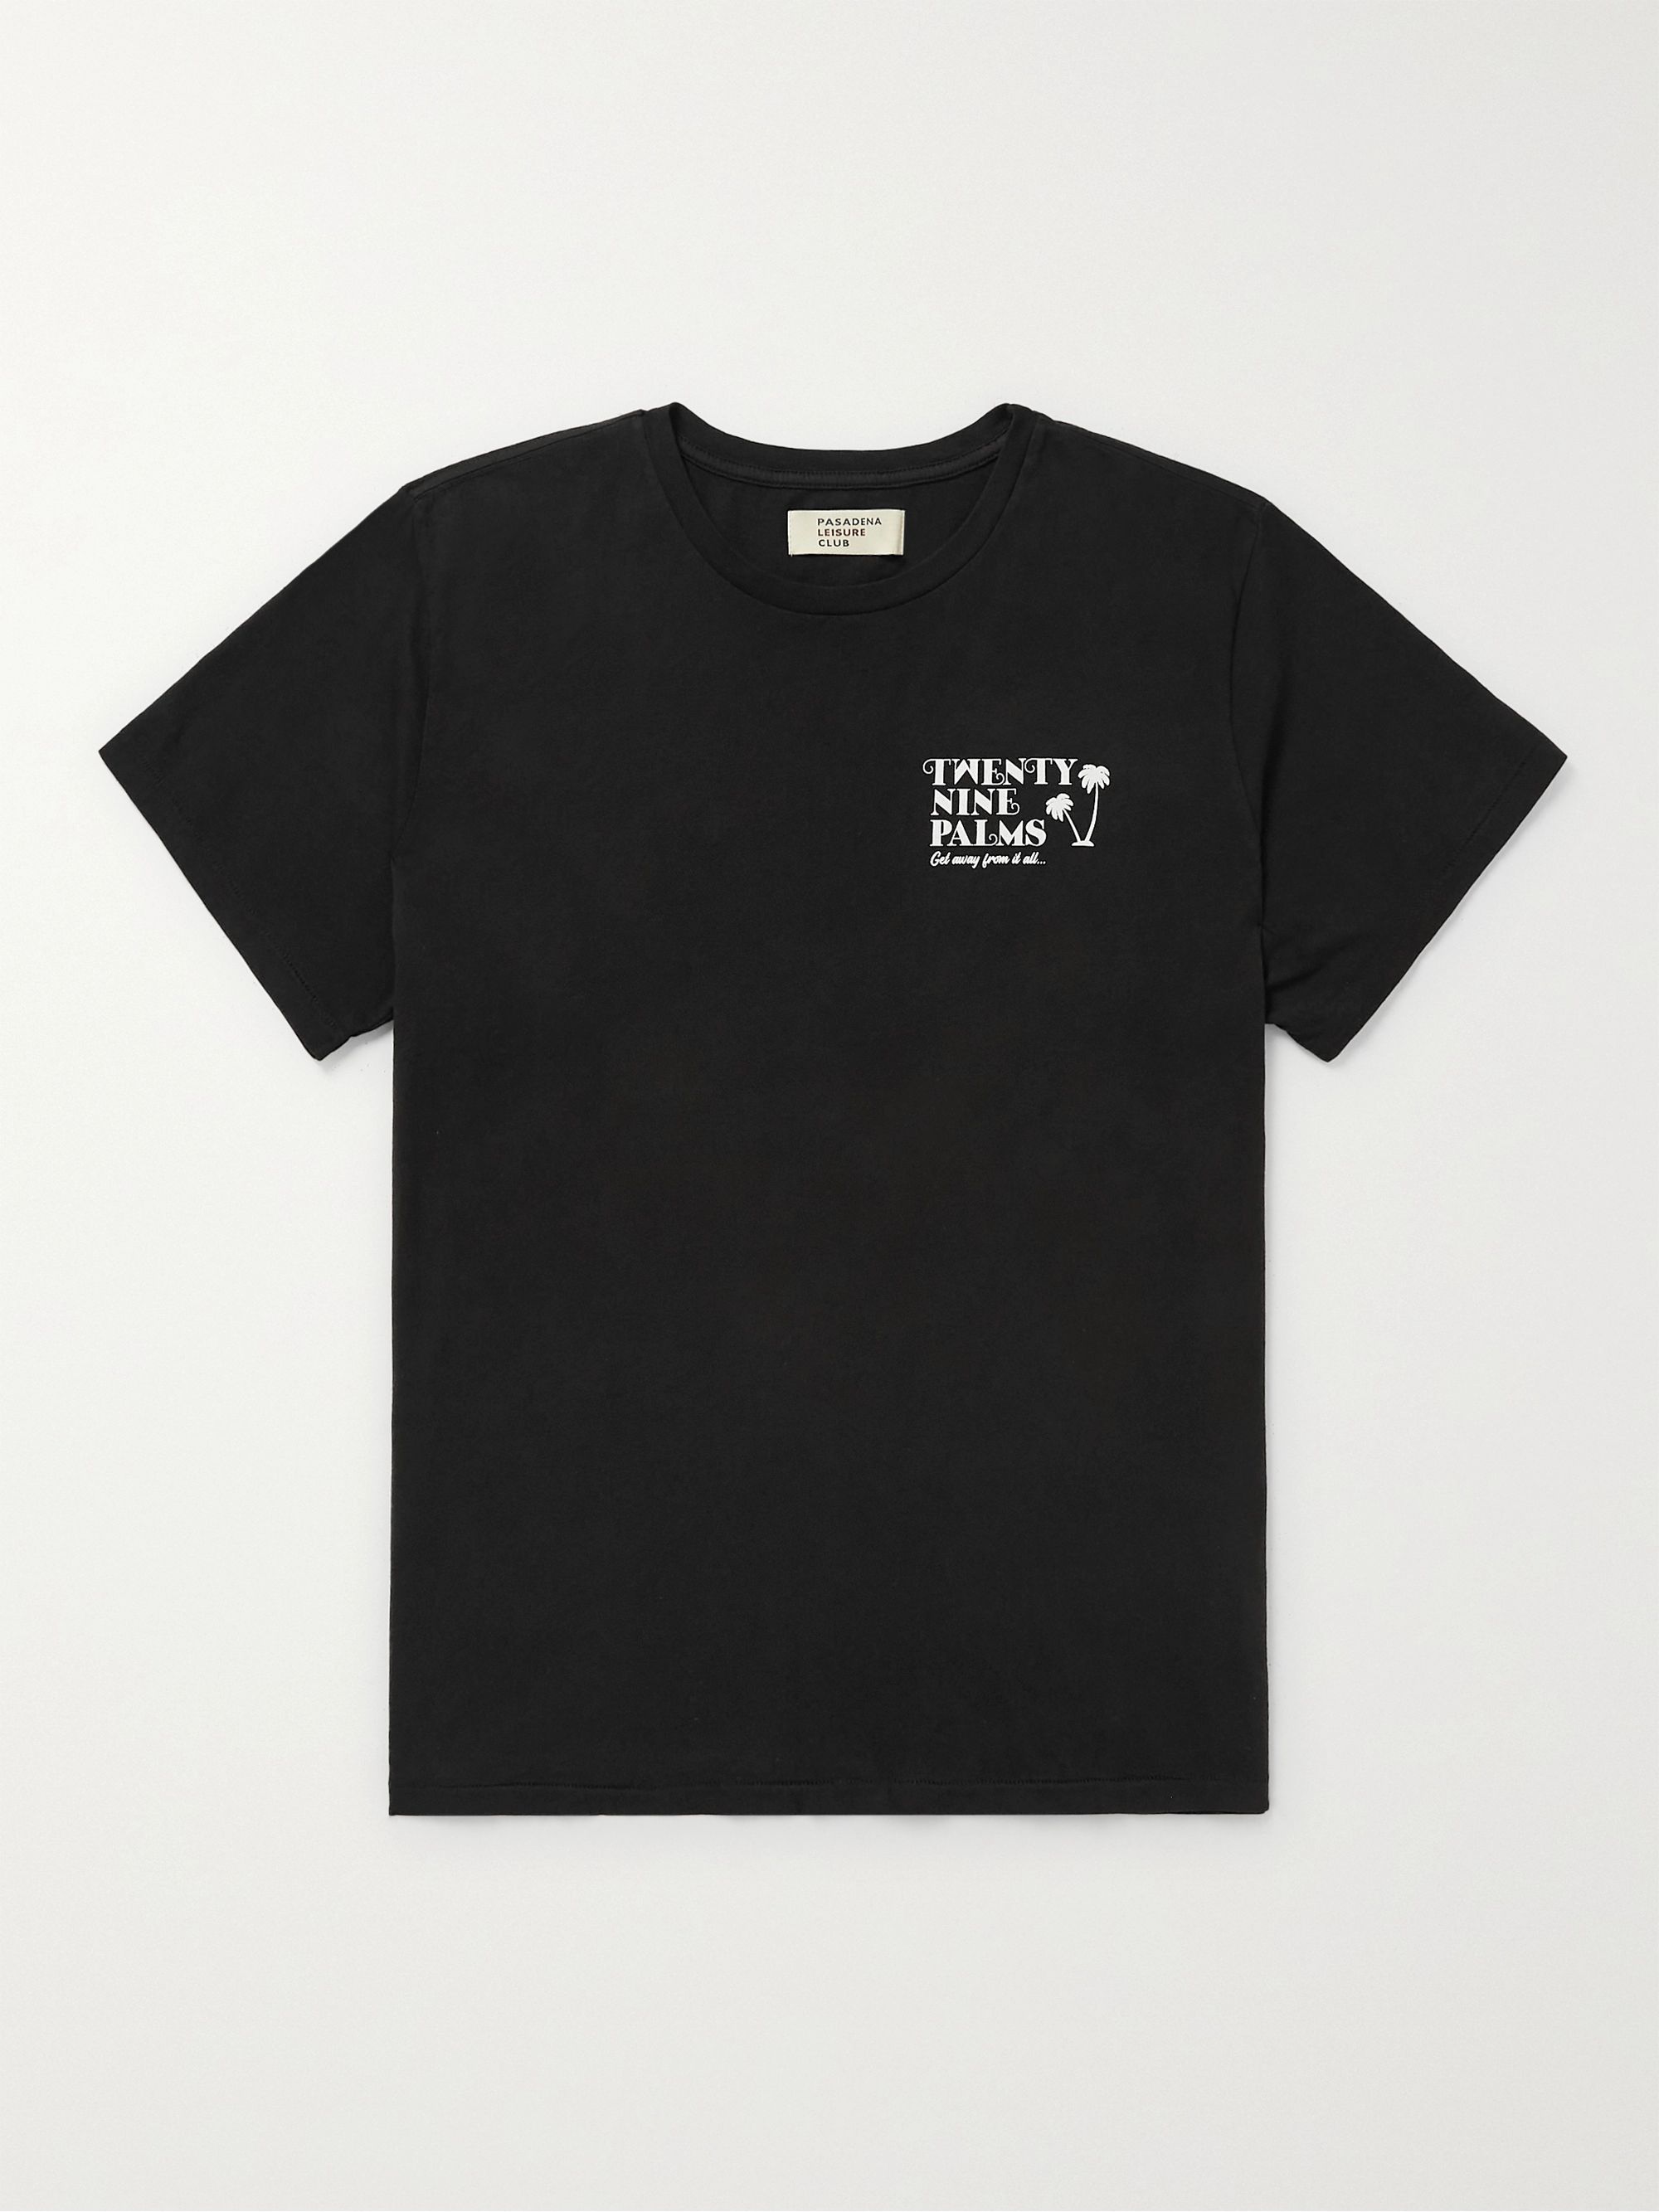 Black Printed Cotton-Jersey T-Shirt | PASADENA LEISURE CLUB | MR PORTER